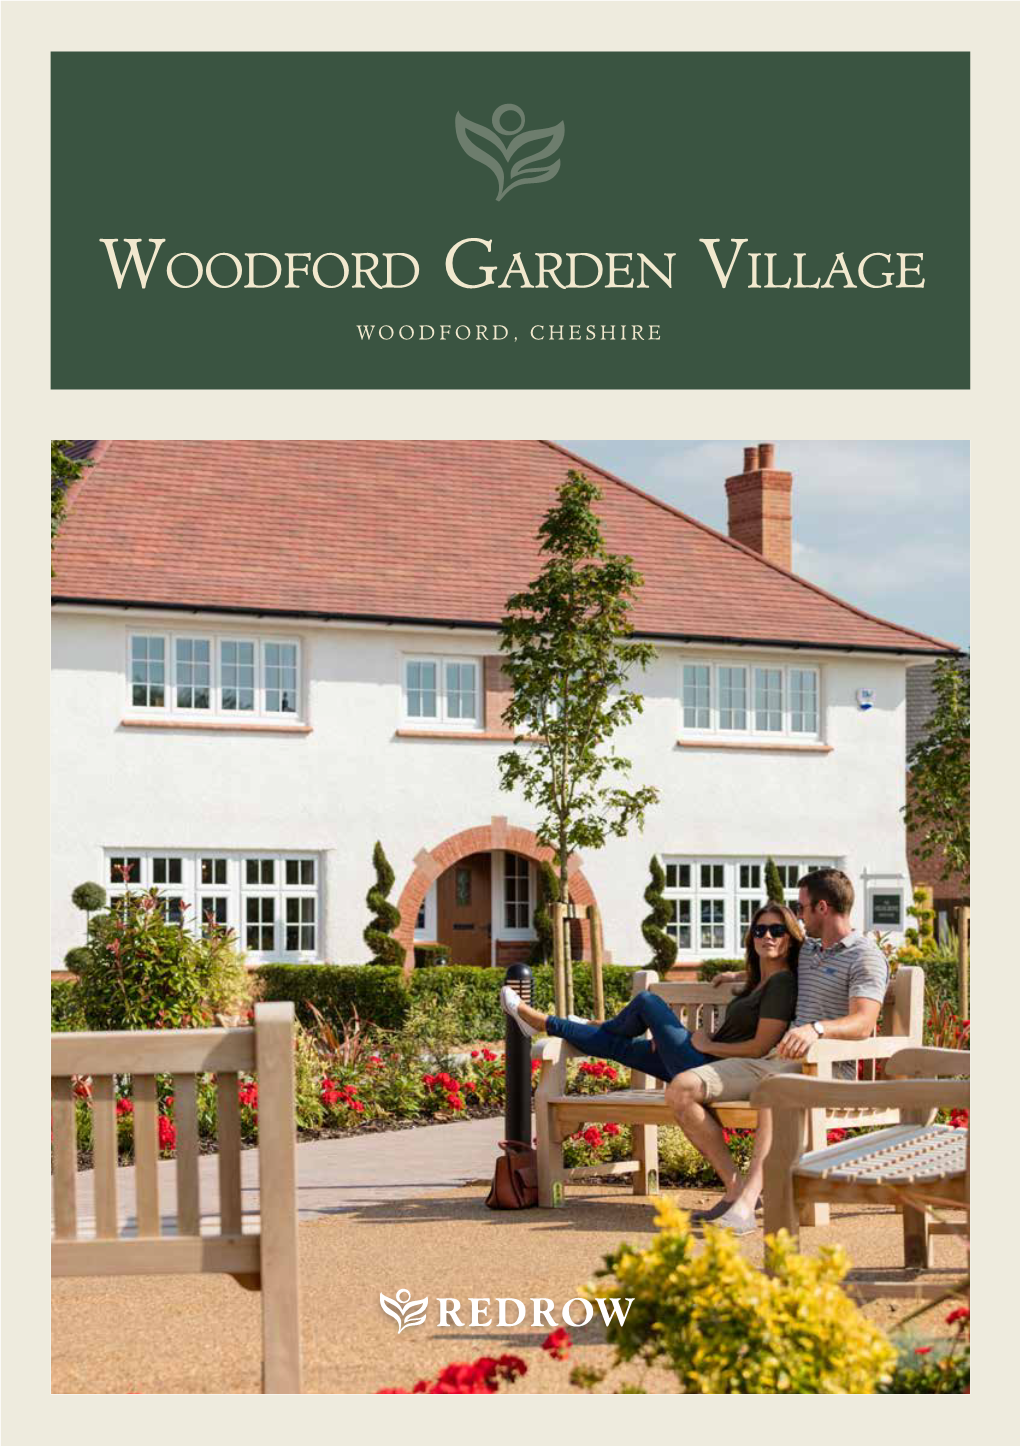 Woodford Garden Village WOODFORD, CHESHIRE Welcome to WOODFORD GARDEN VILLAGE WOODFORD, CHESHIRE